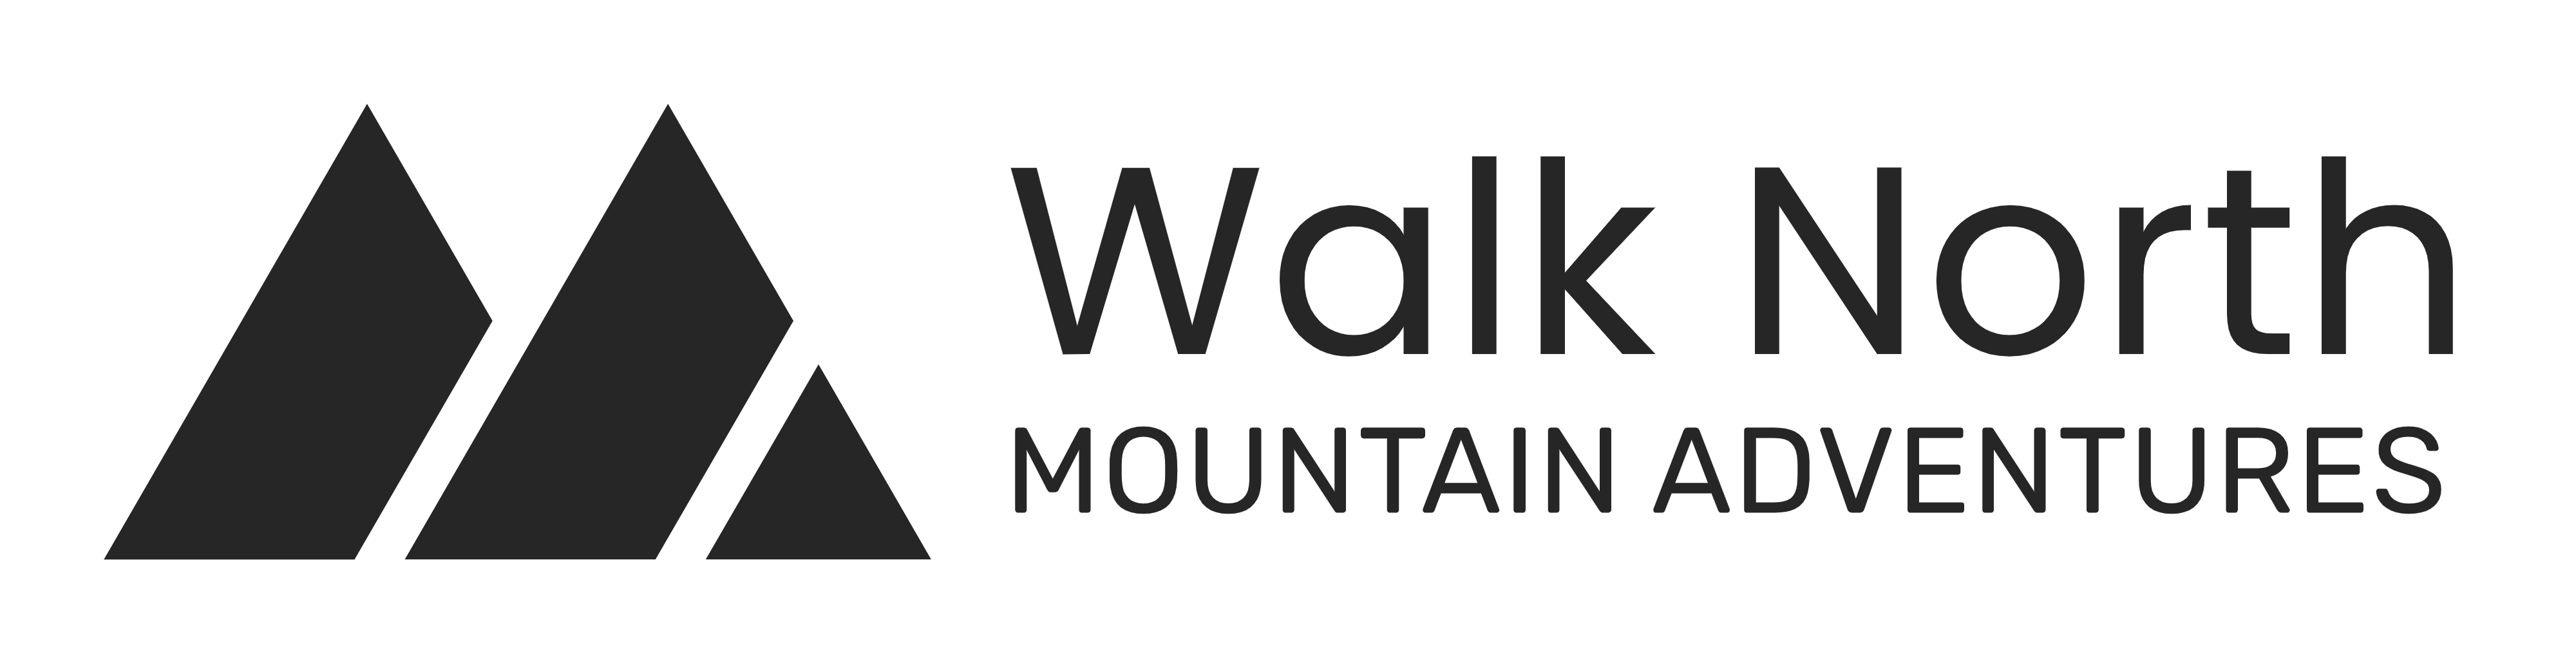 Walknorth Logo